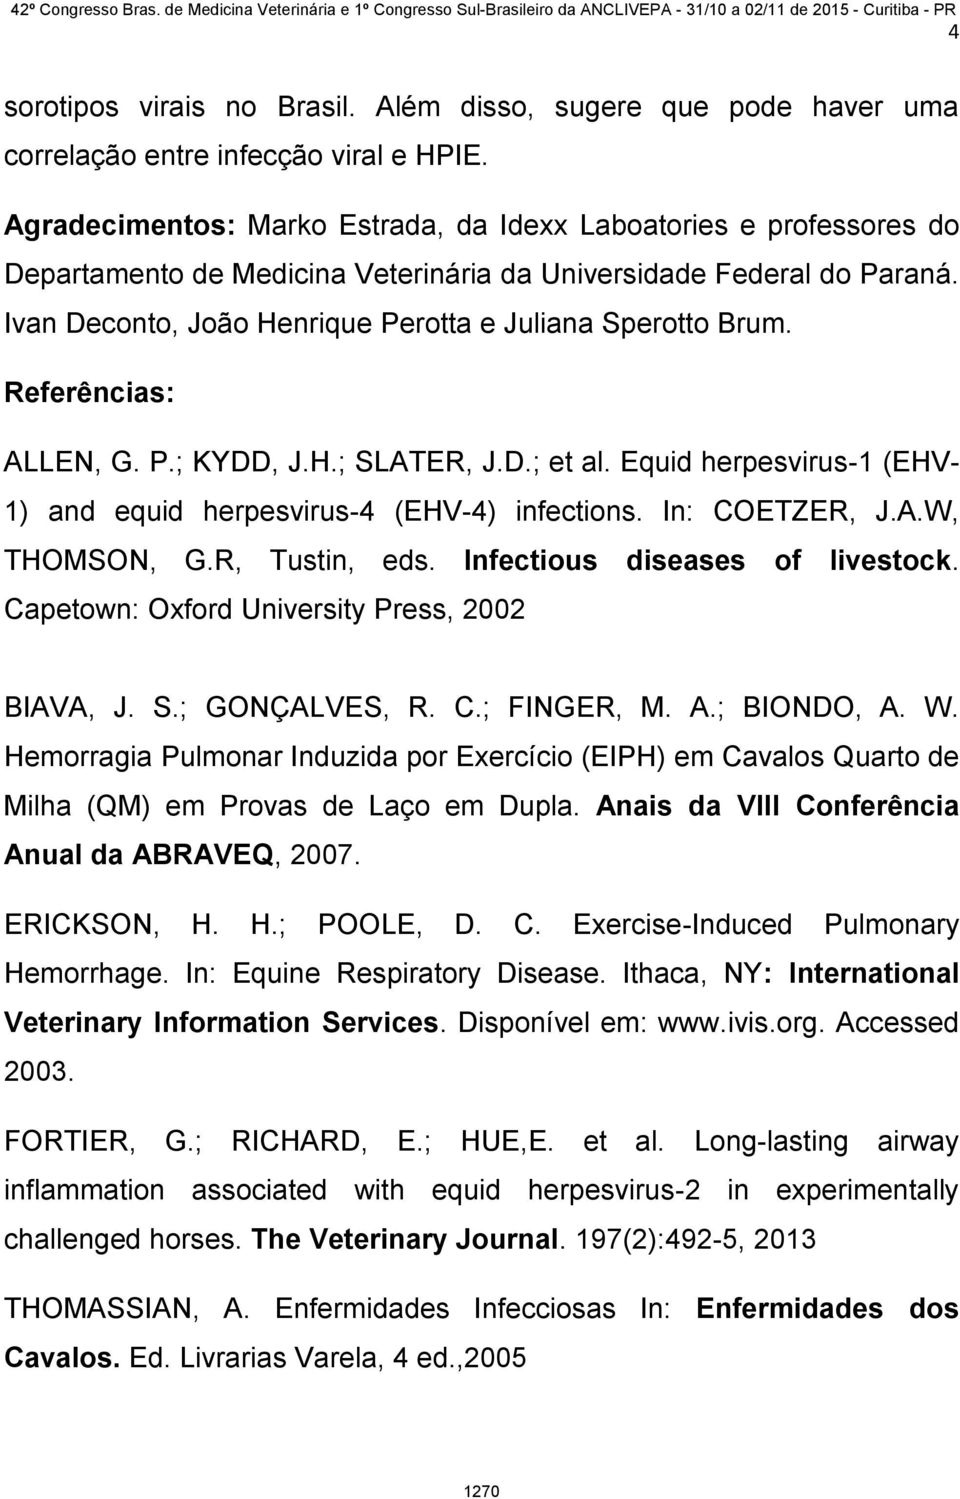 Ivan Deconto, João Henrique Perotta e Juliana Sperotto Brum. Referências: ALLEN, G. P.; KYDD, J.H.; SLATER, J.D.; et al. Equid herpesvirus-1 (EHV- 1) and equid herpesvirus-4 (EHV-4) infections.